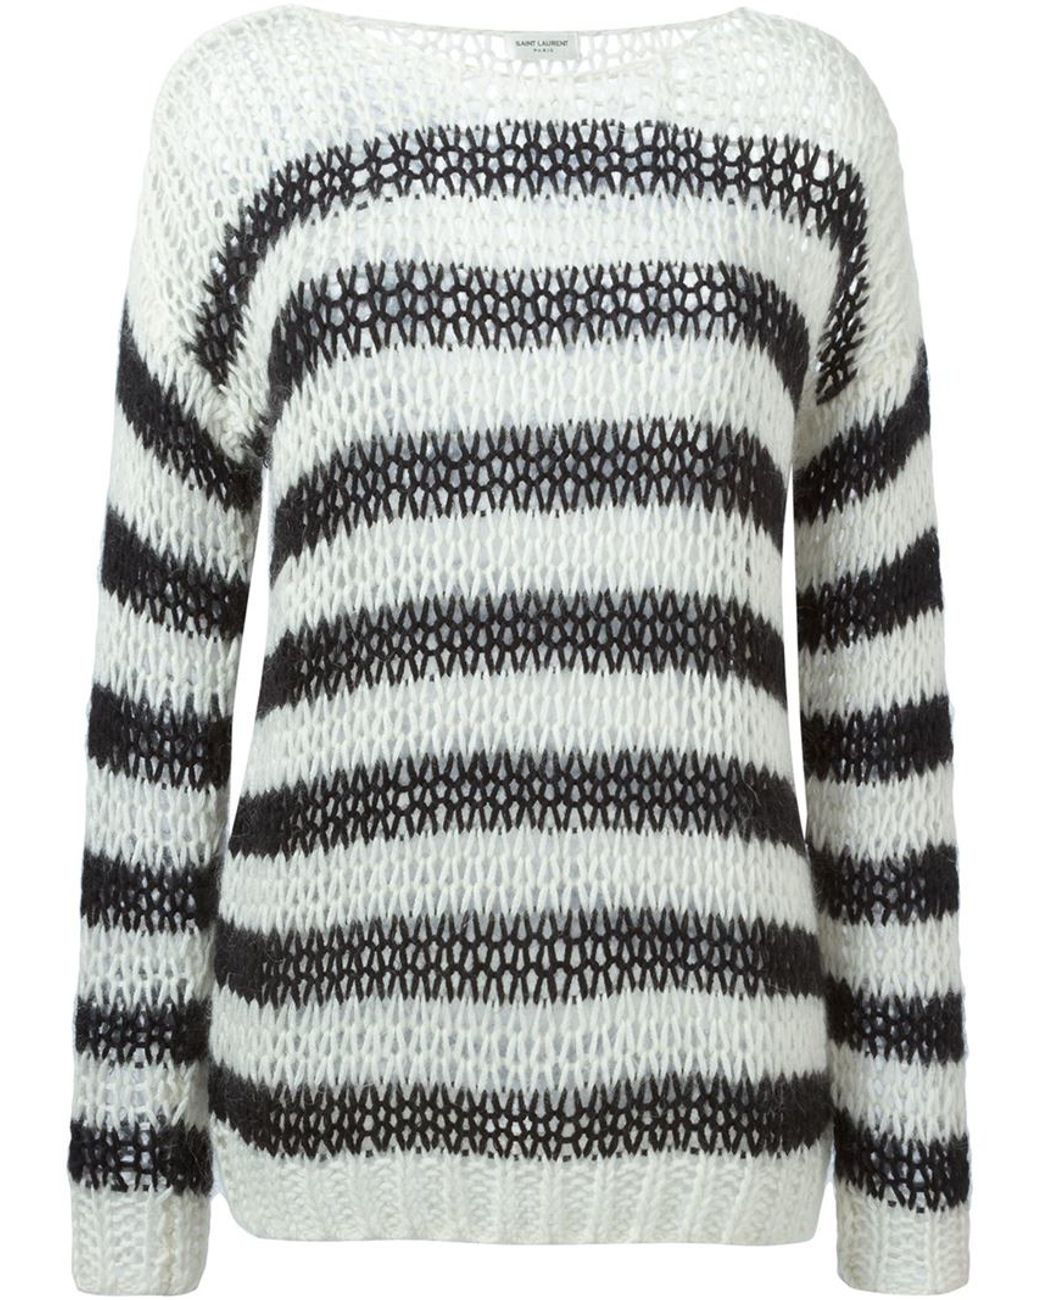 Jordana Black and White Striped Loose Knit Sweater